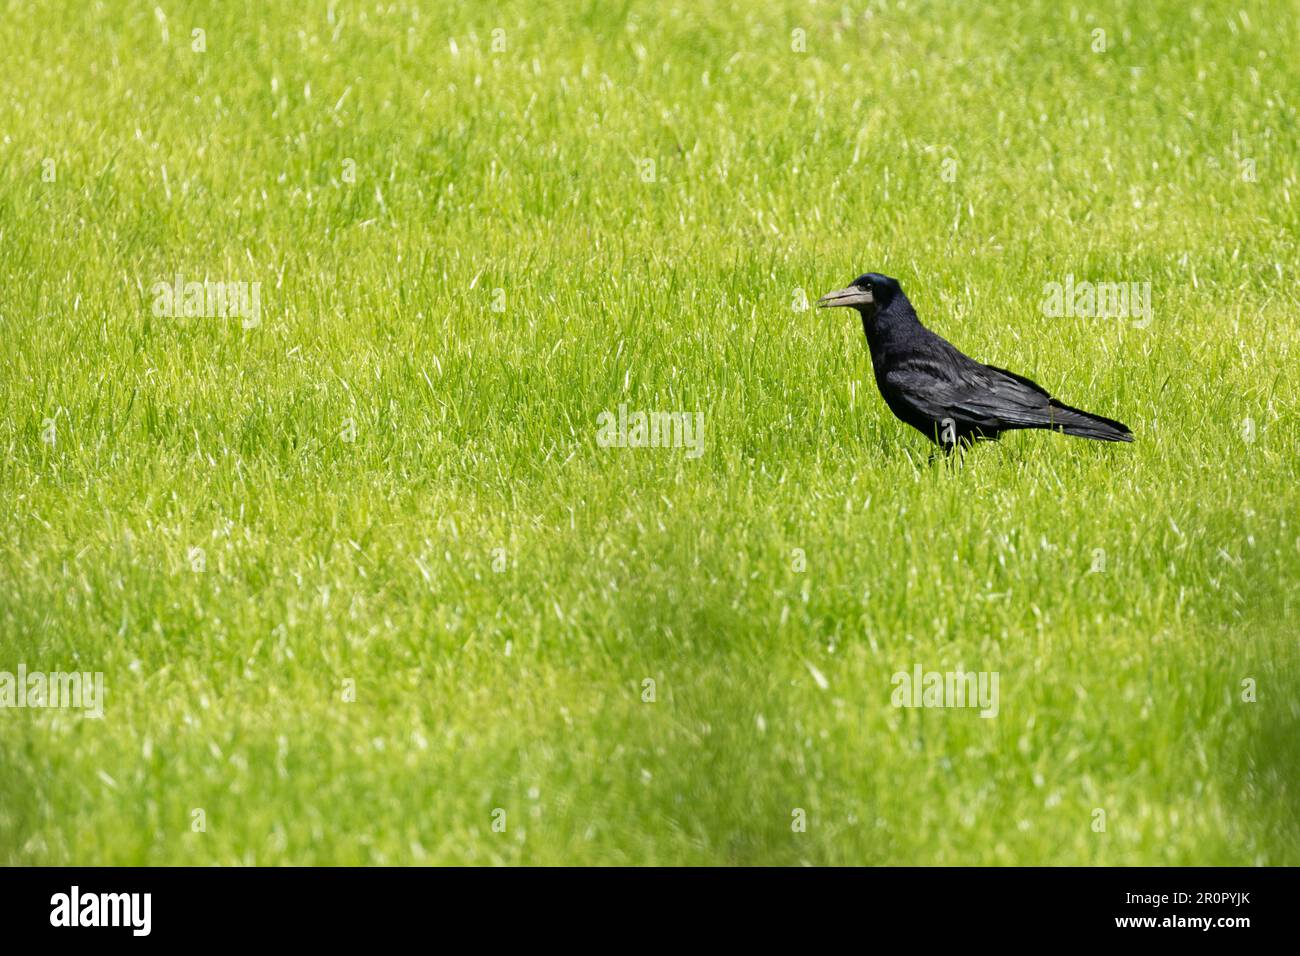 A rook (corvus frugilegus) sits in a grass field Stock Photo